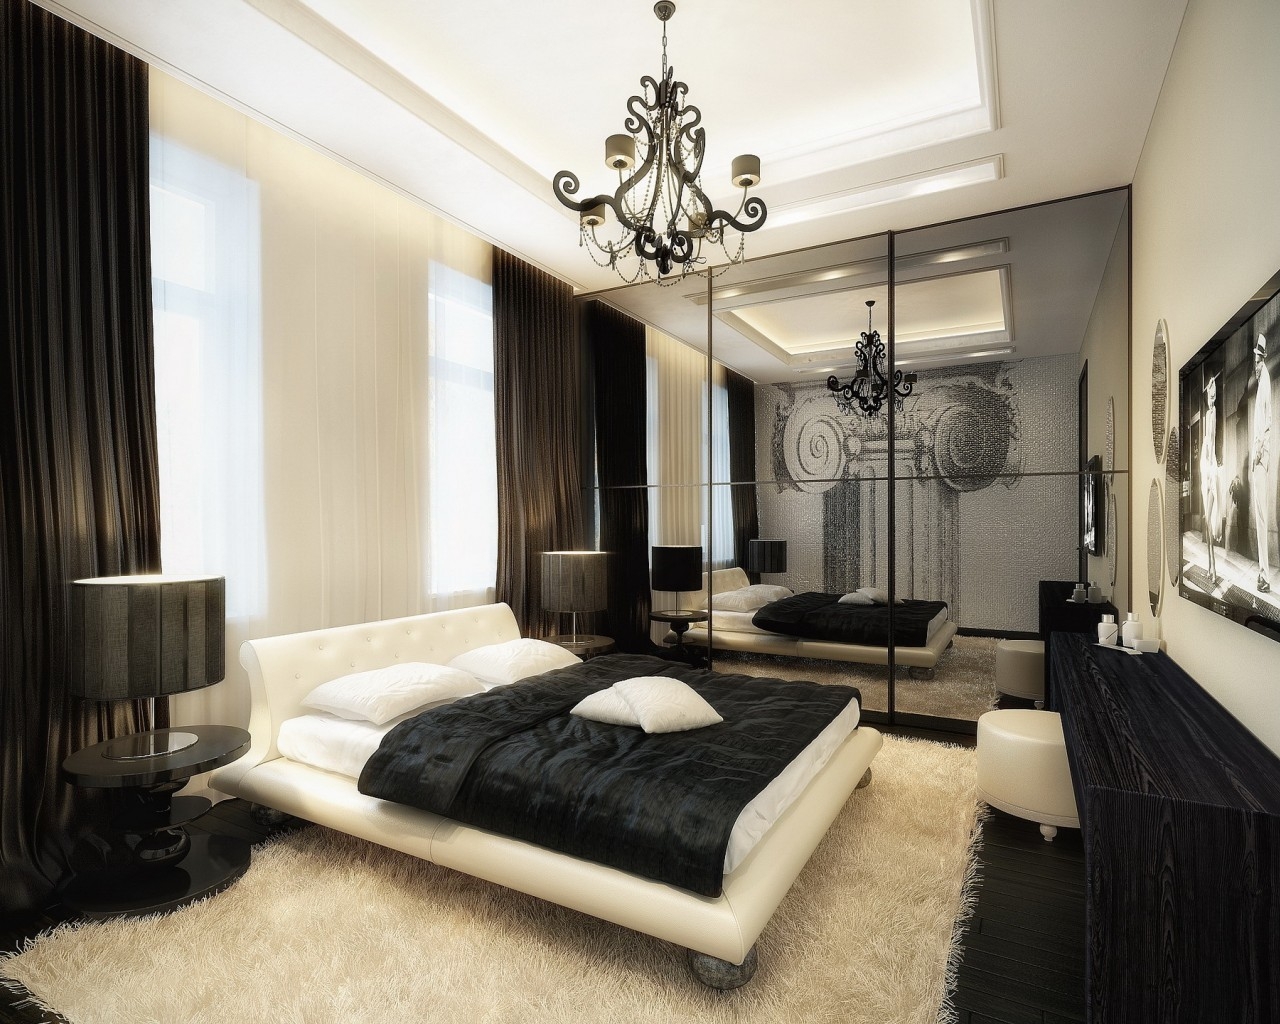 Splendid Bedroom Design for 1280 x 1024 resolution